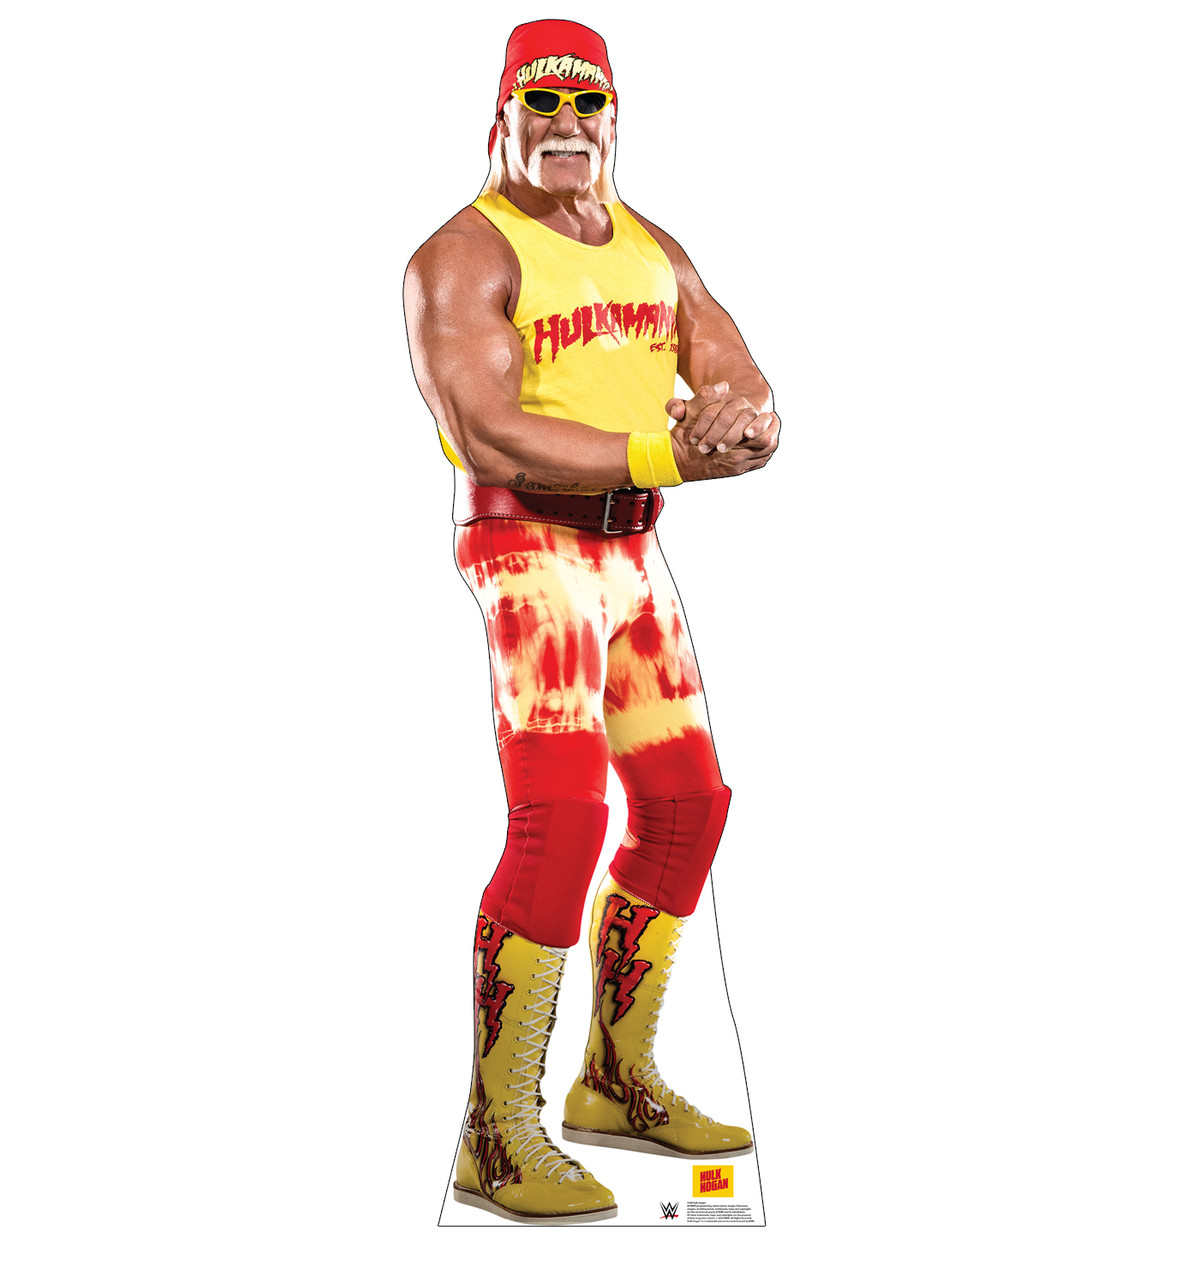 Life-size cardboard standee of Hulk Hogan.